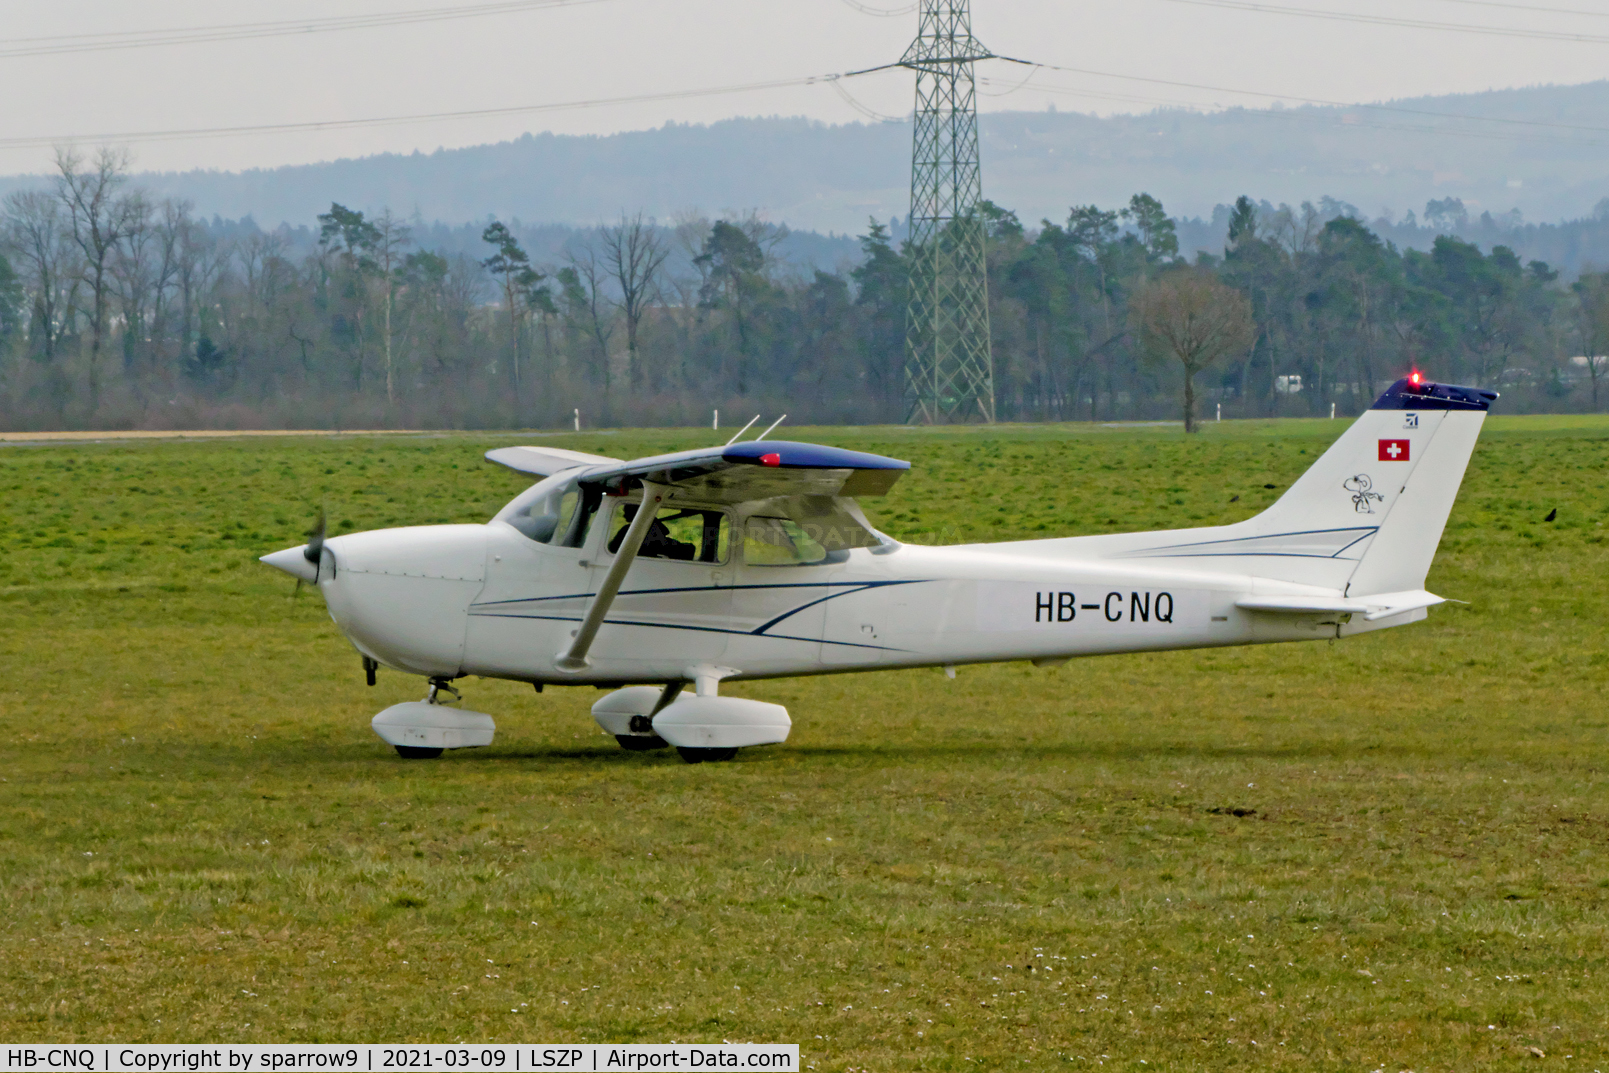 HB-CNQ, 1979 Reims F172N Skyhawk C/N 1789, Now airworthy, at its Base Biel-Kappelen.